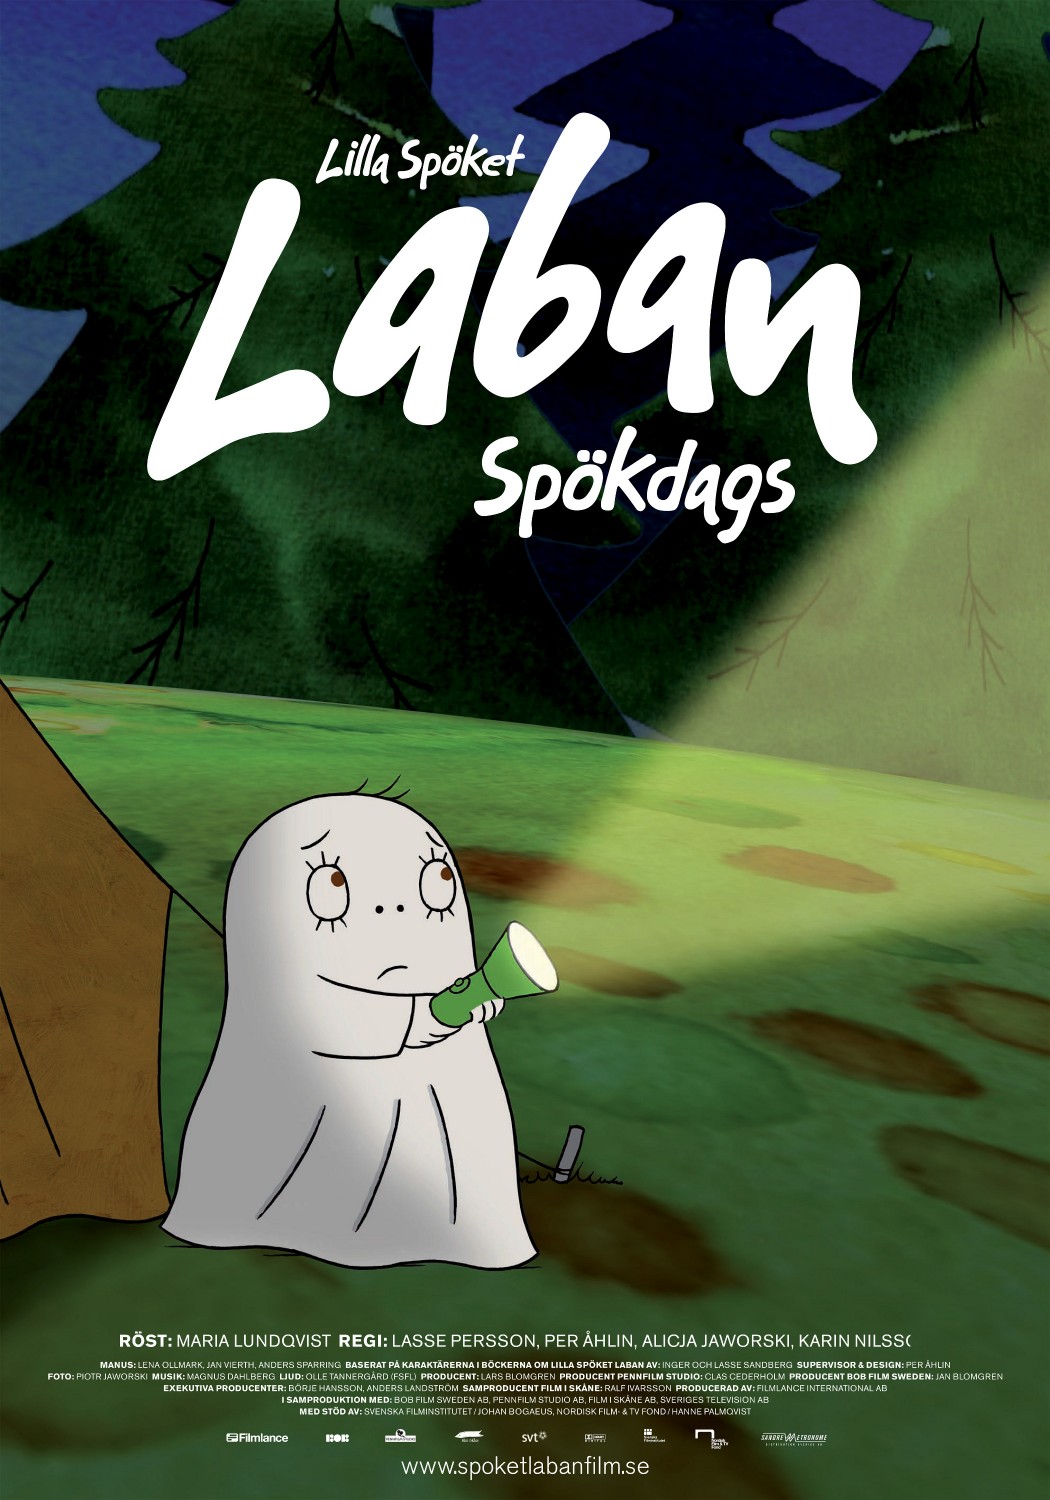 Extra Large Movie Poster Image for Lilla spket Laban - Spkdags